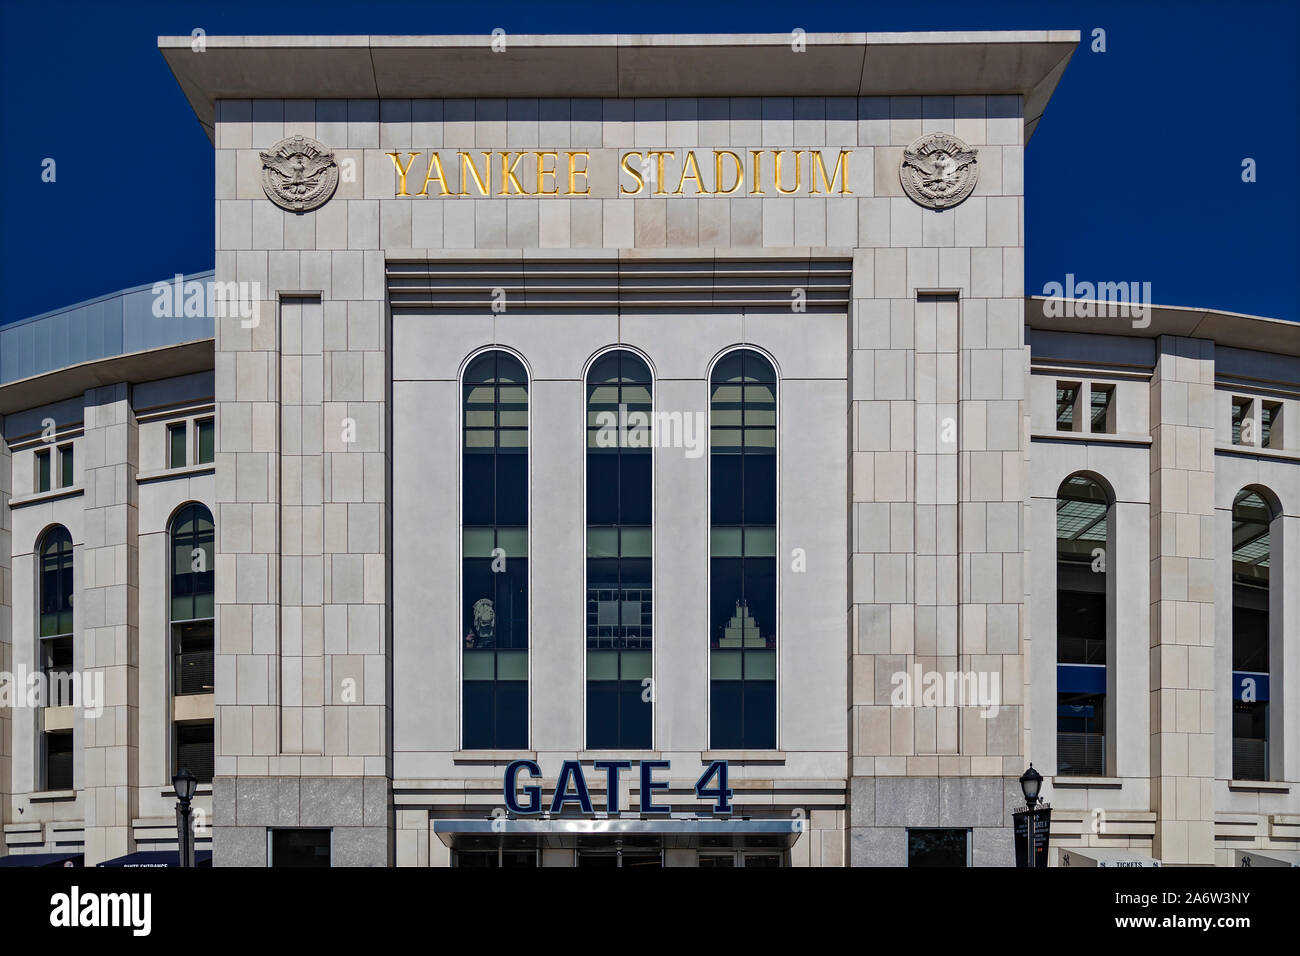 NY Yankee Stadium Gate 4 Stock Photo